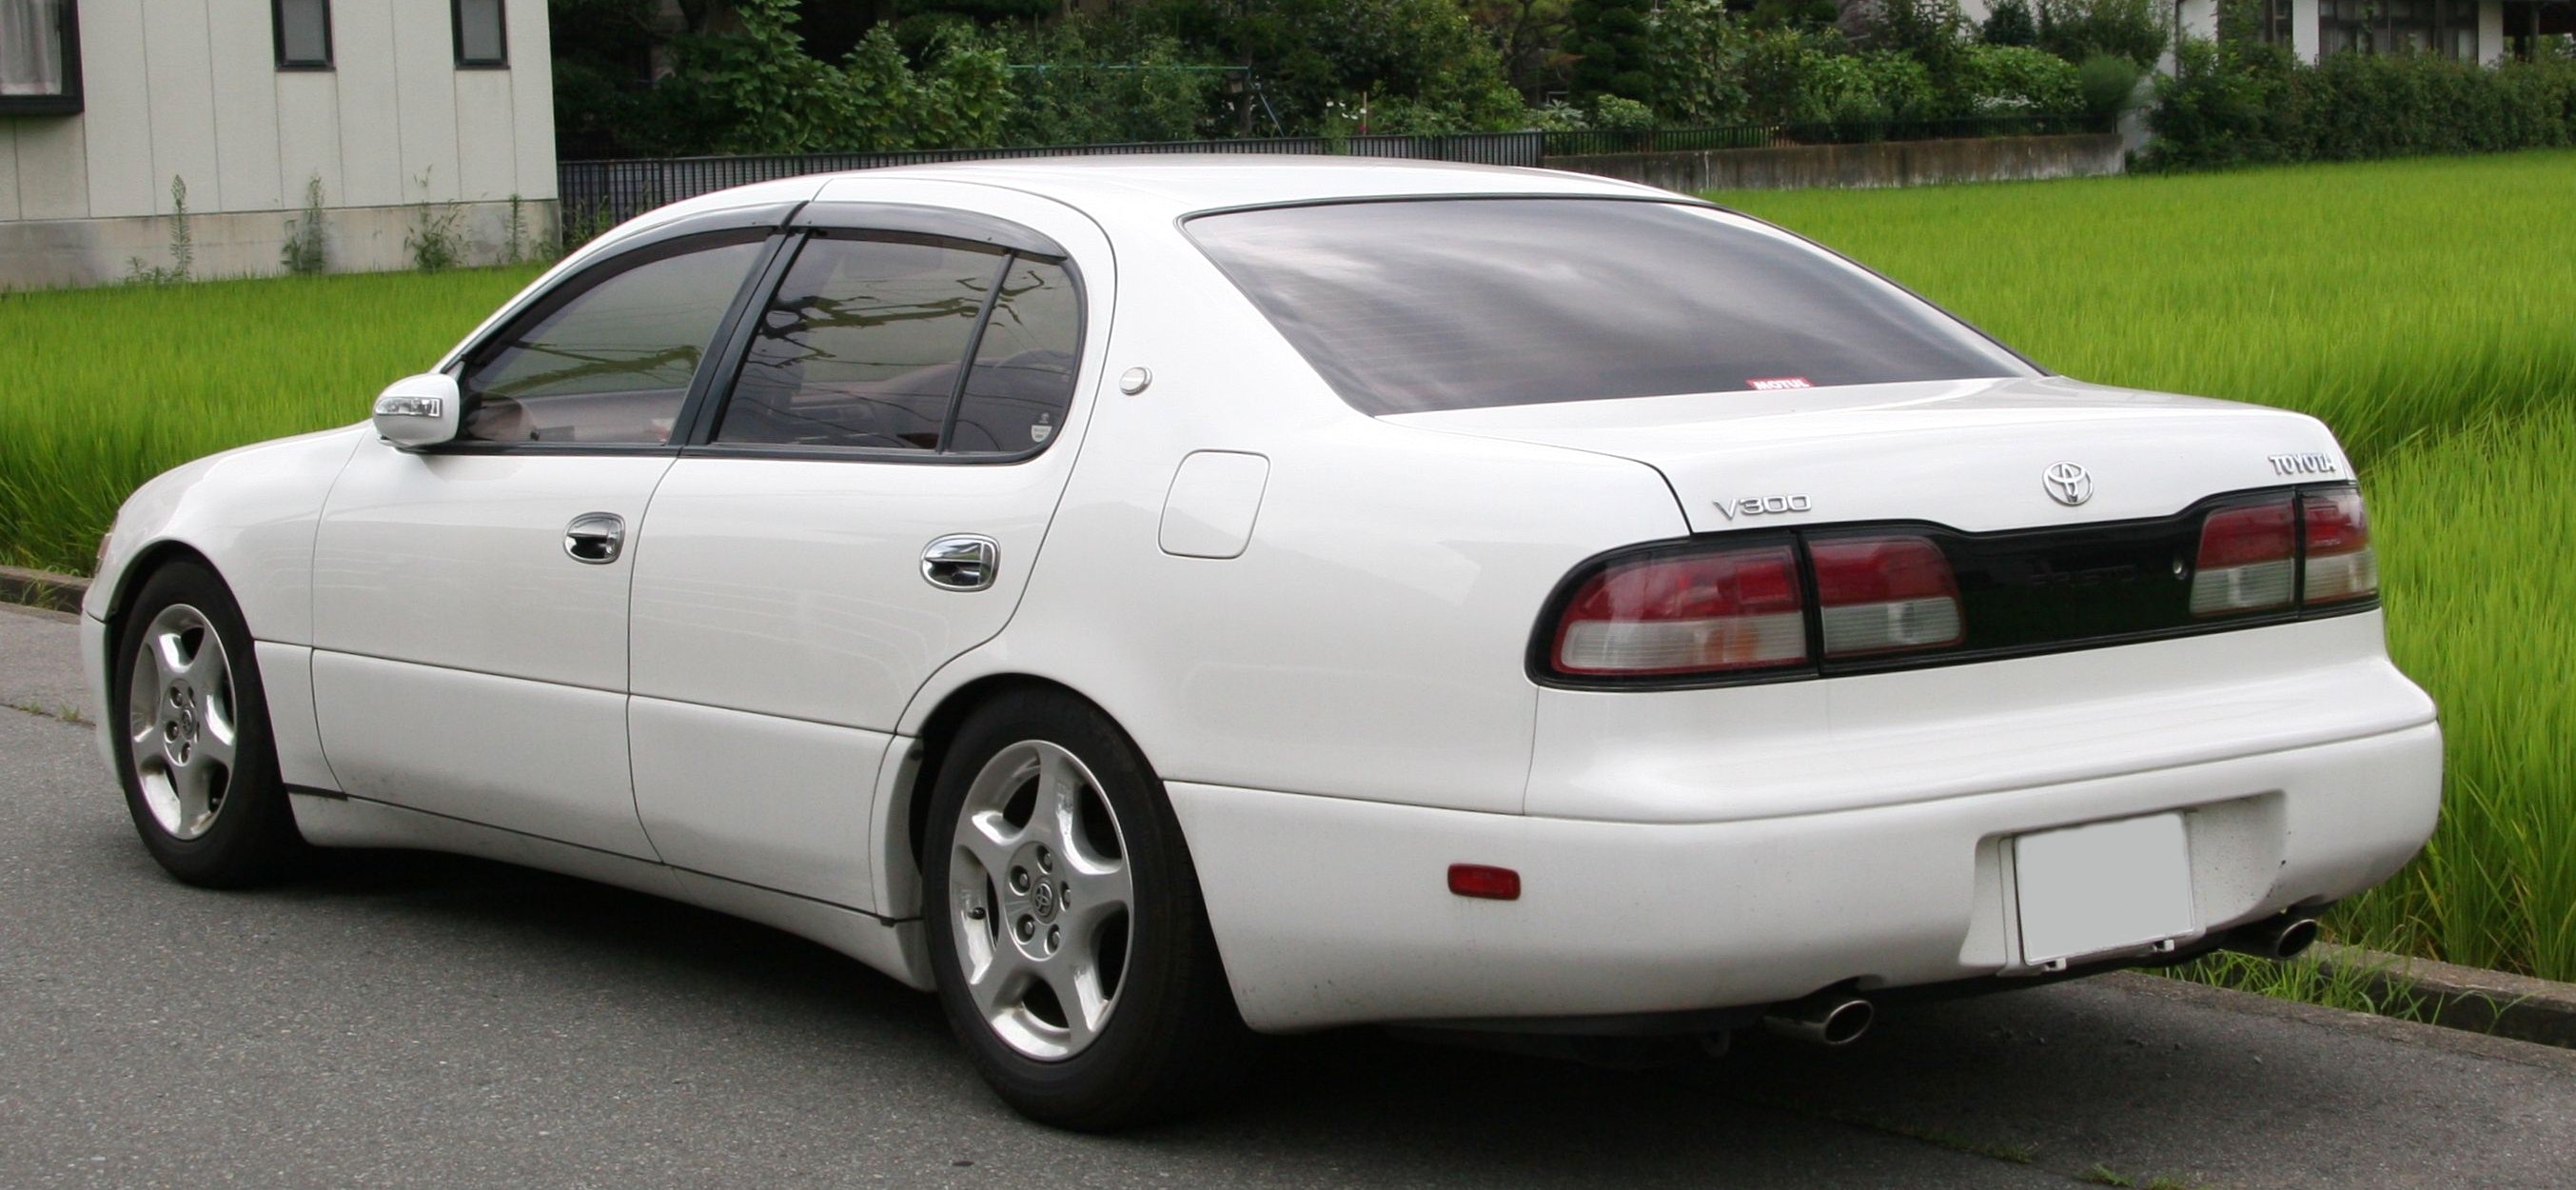 File:1st generation Toyota Aristo rear.jpg